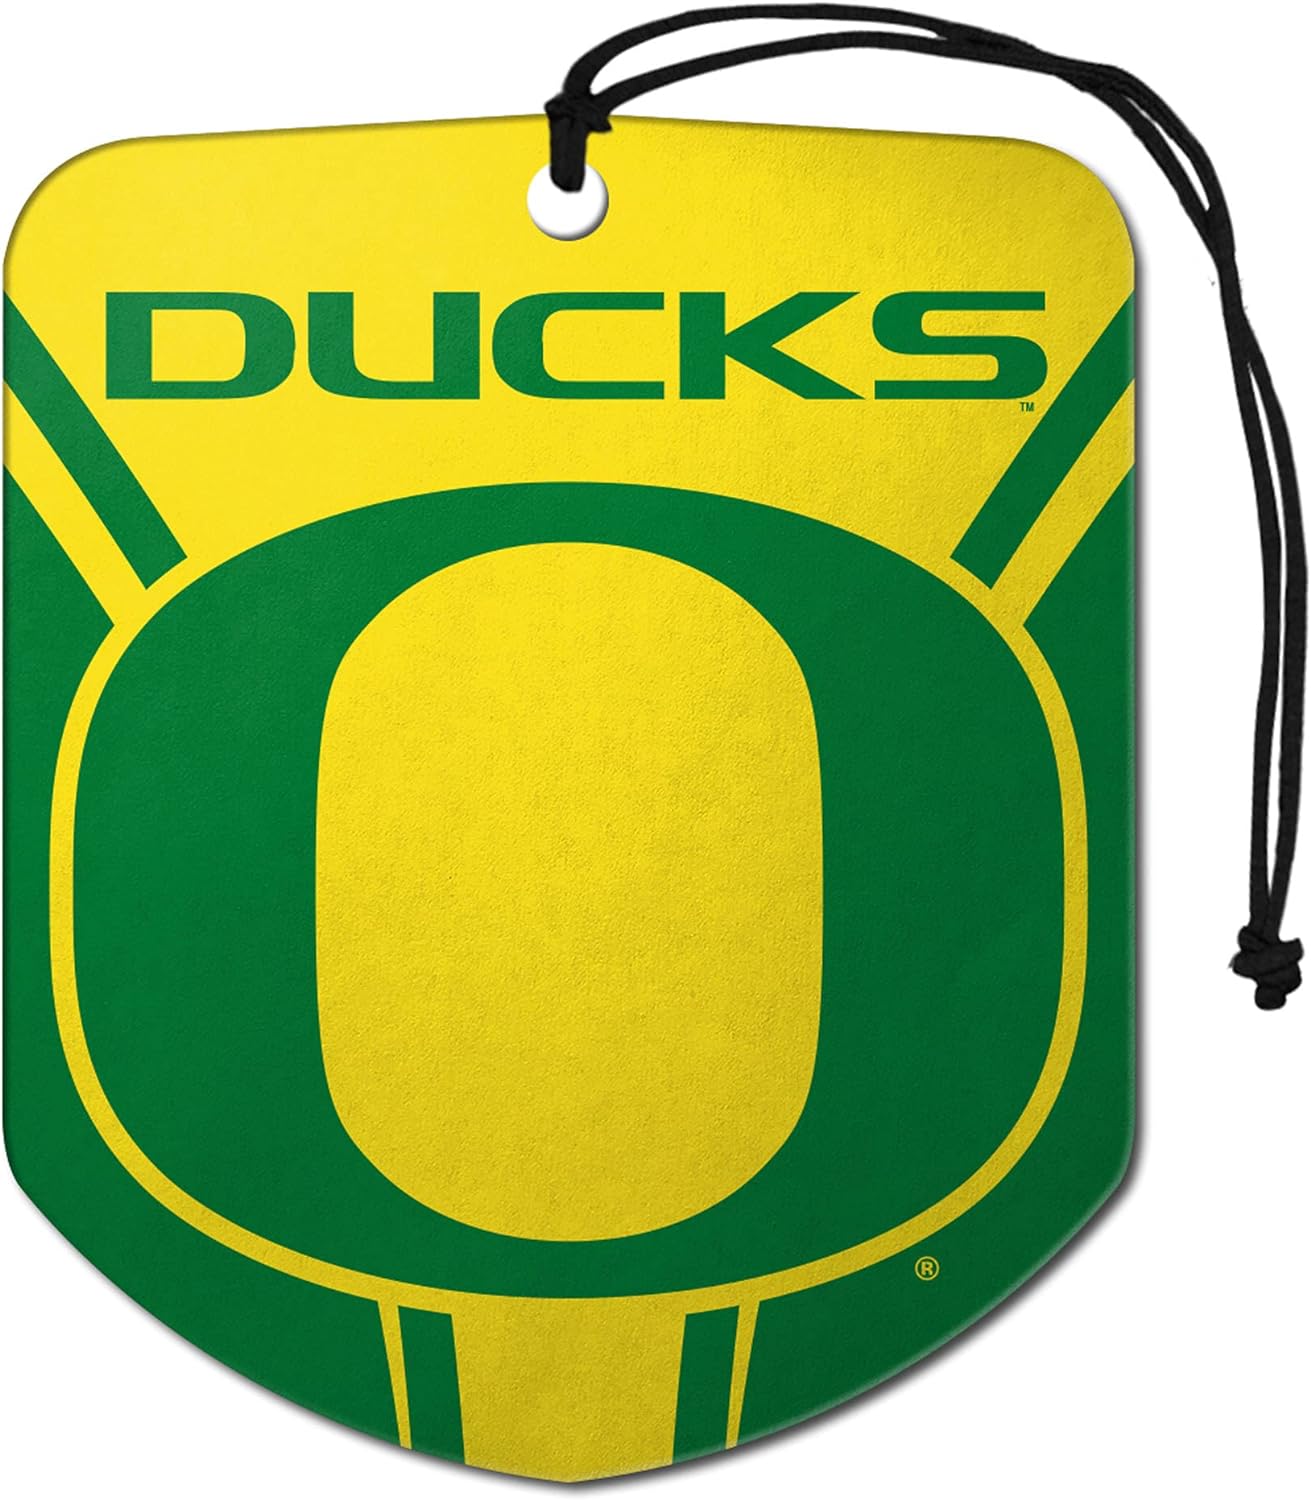 FANMATS 61629 NCAA Oregon Ducks Hanging Car Air Freshener, 2 Pack, Black Ice Scent, Odor Eliminator, Shield Design with Team Logo